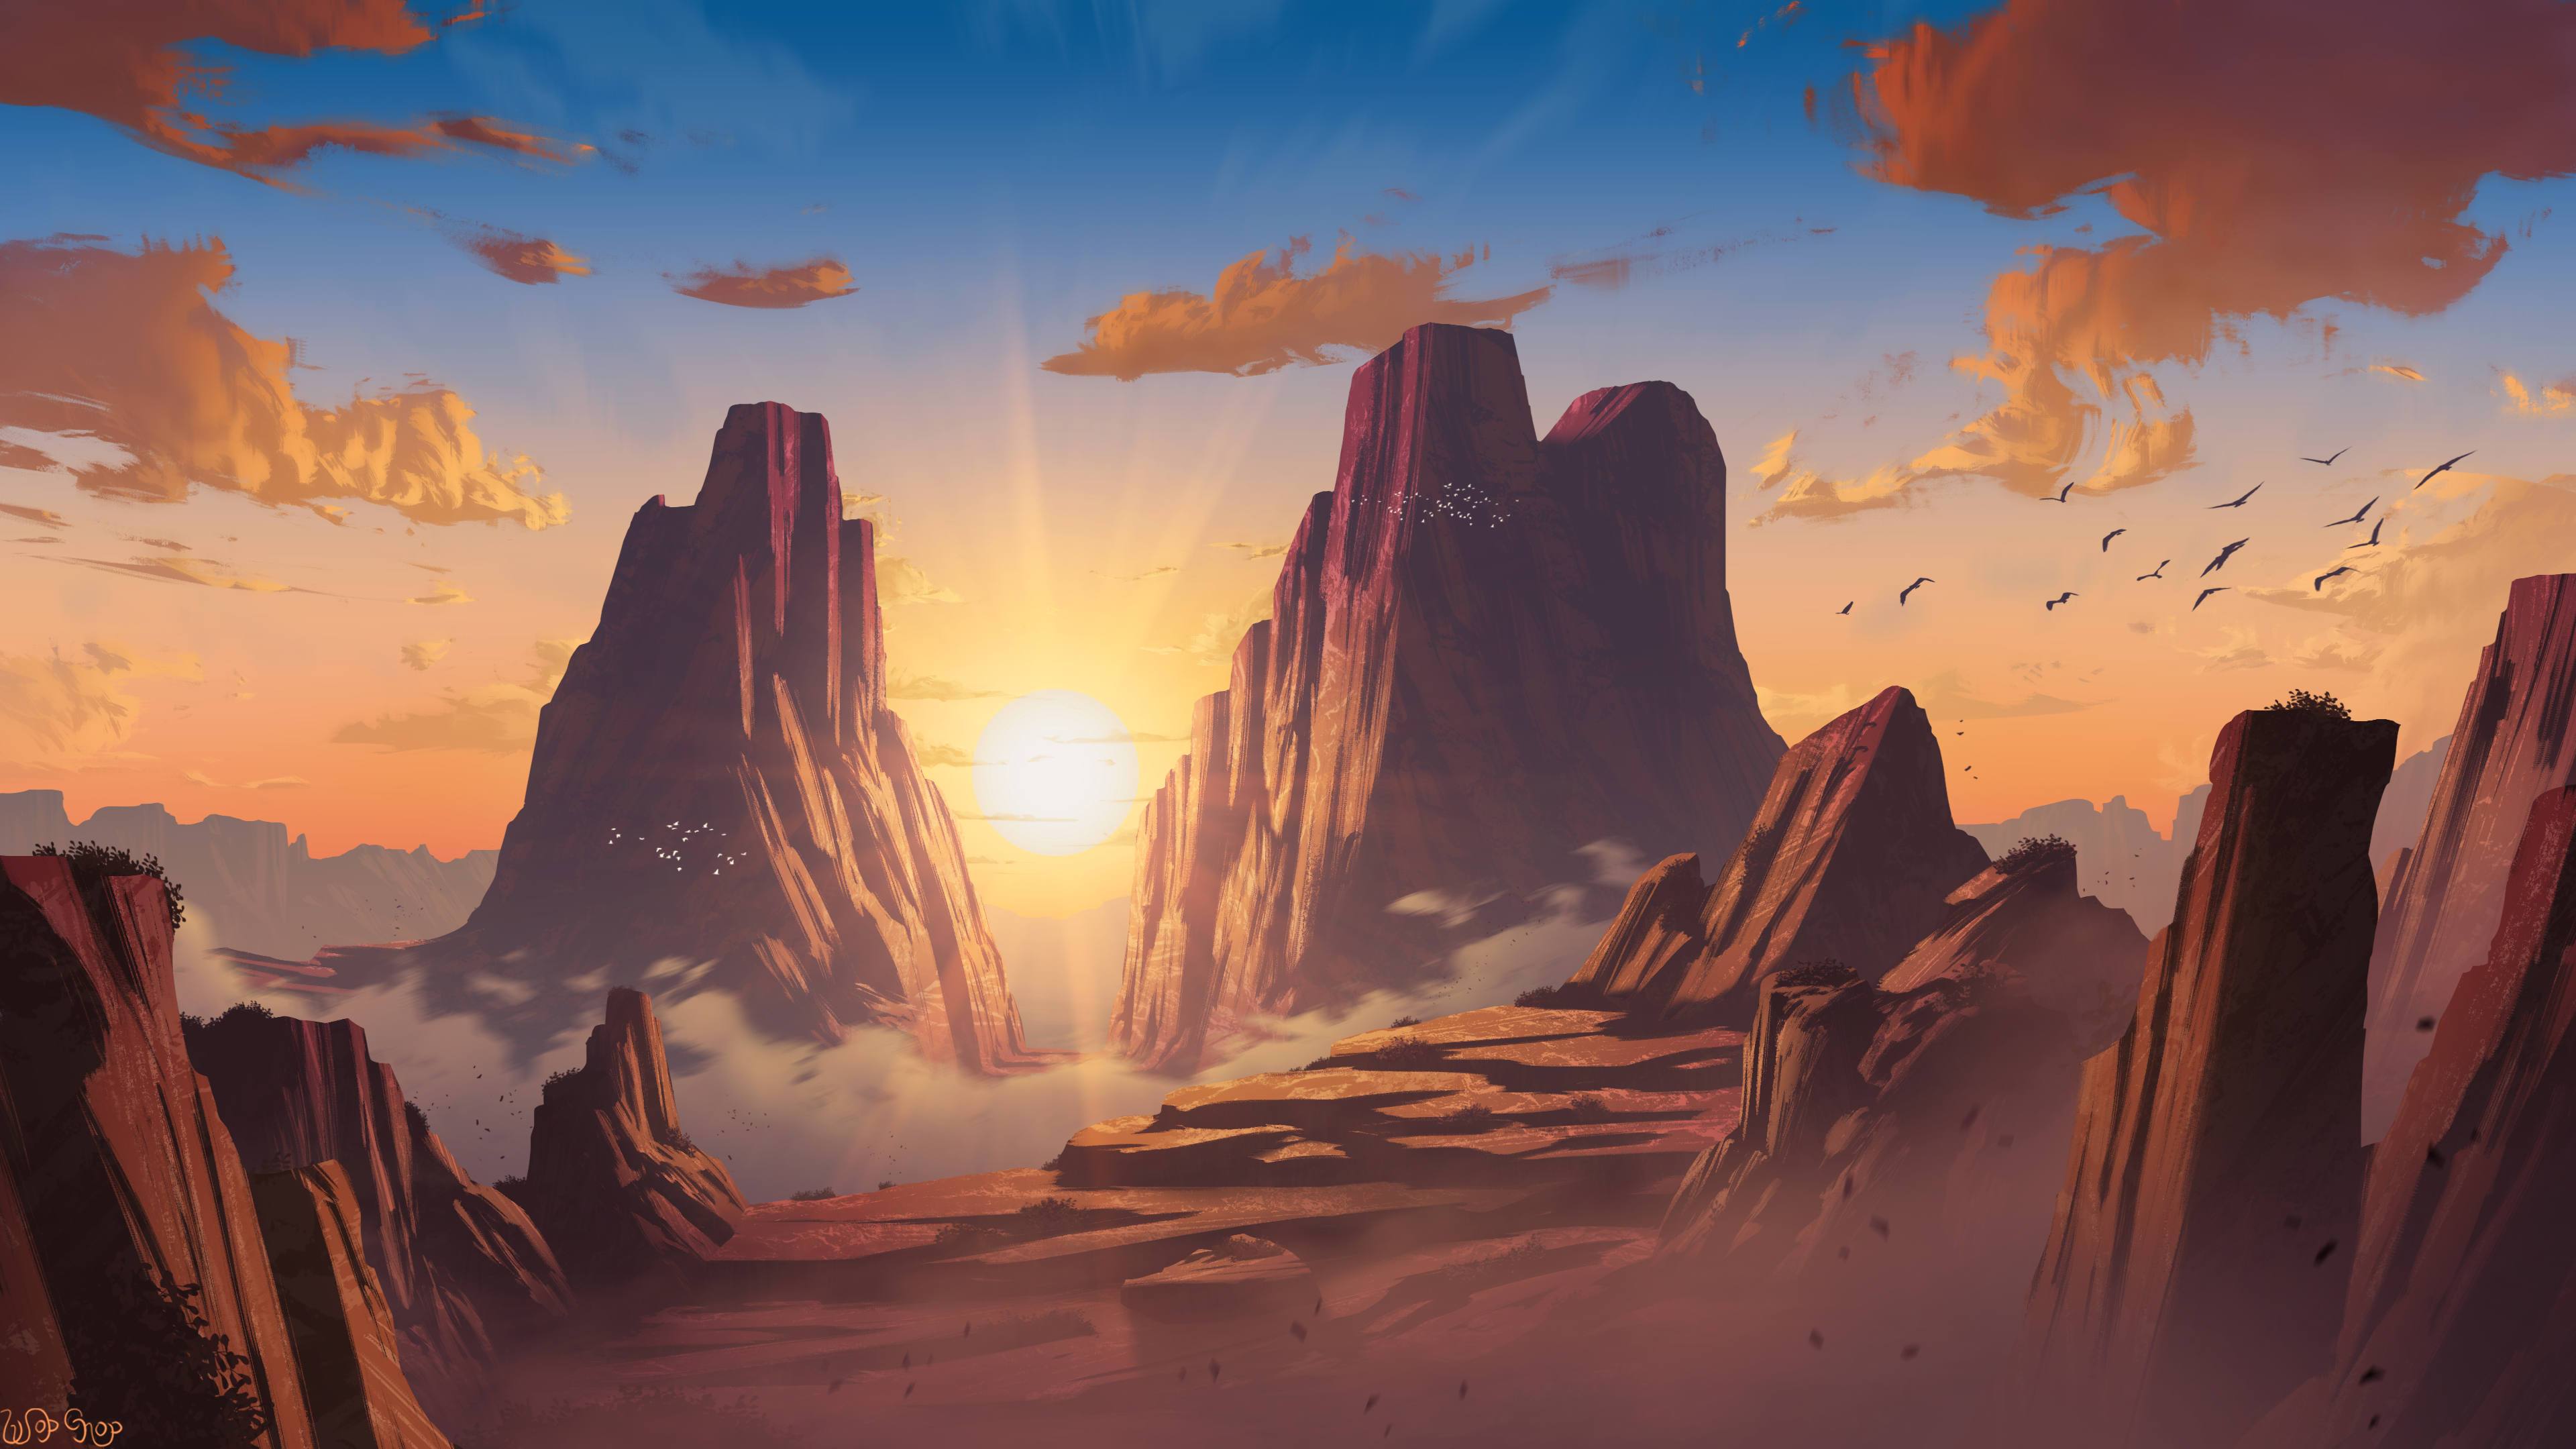 Wopgnop Digital Art Illustration Landscape Nature Sunset Desert Rock Formation Clouds Birds Environm 3840x2160